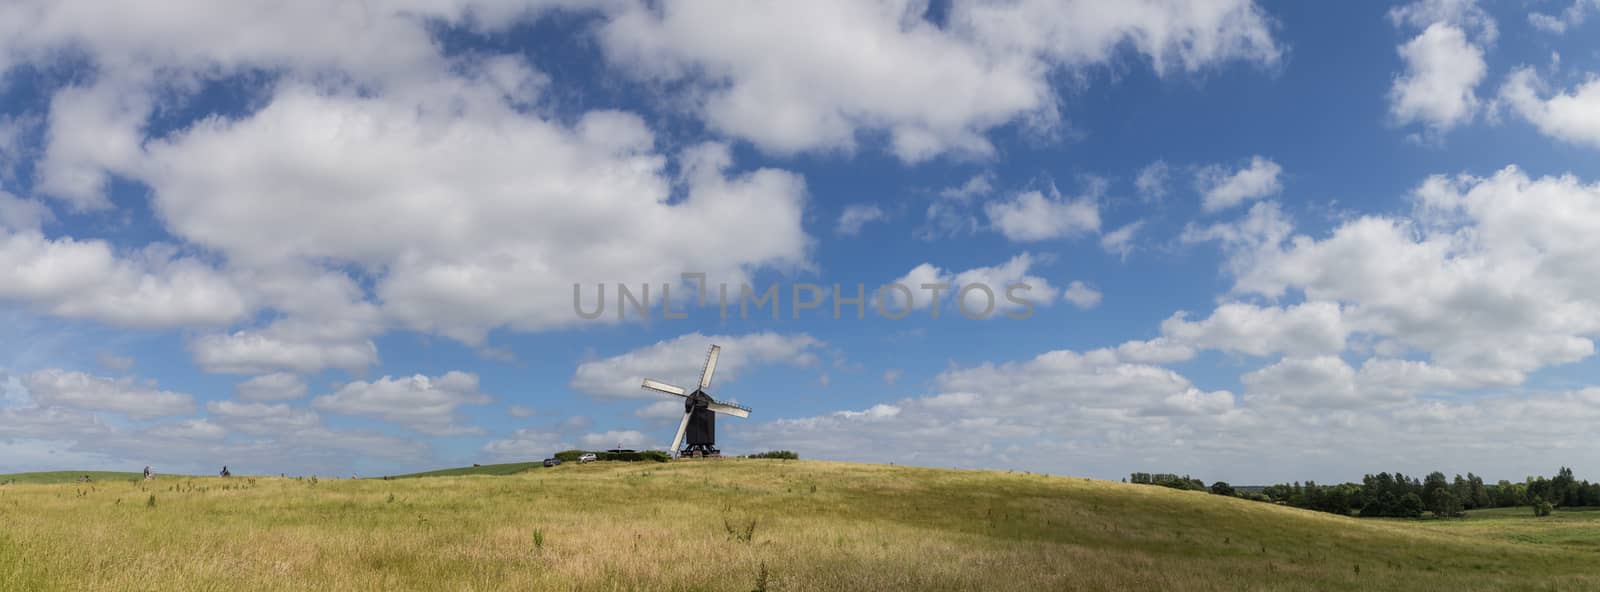 Danish Windmill landscape panorama by oliverfoerstner